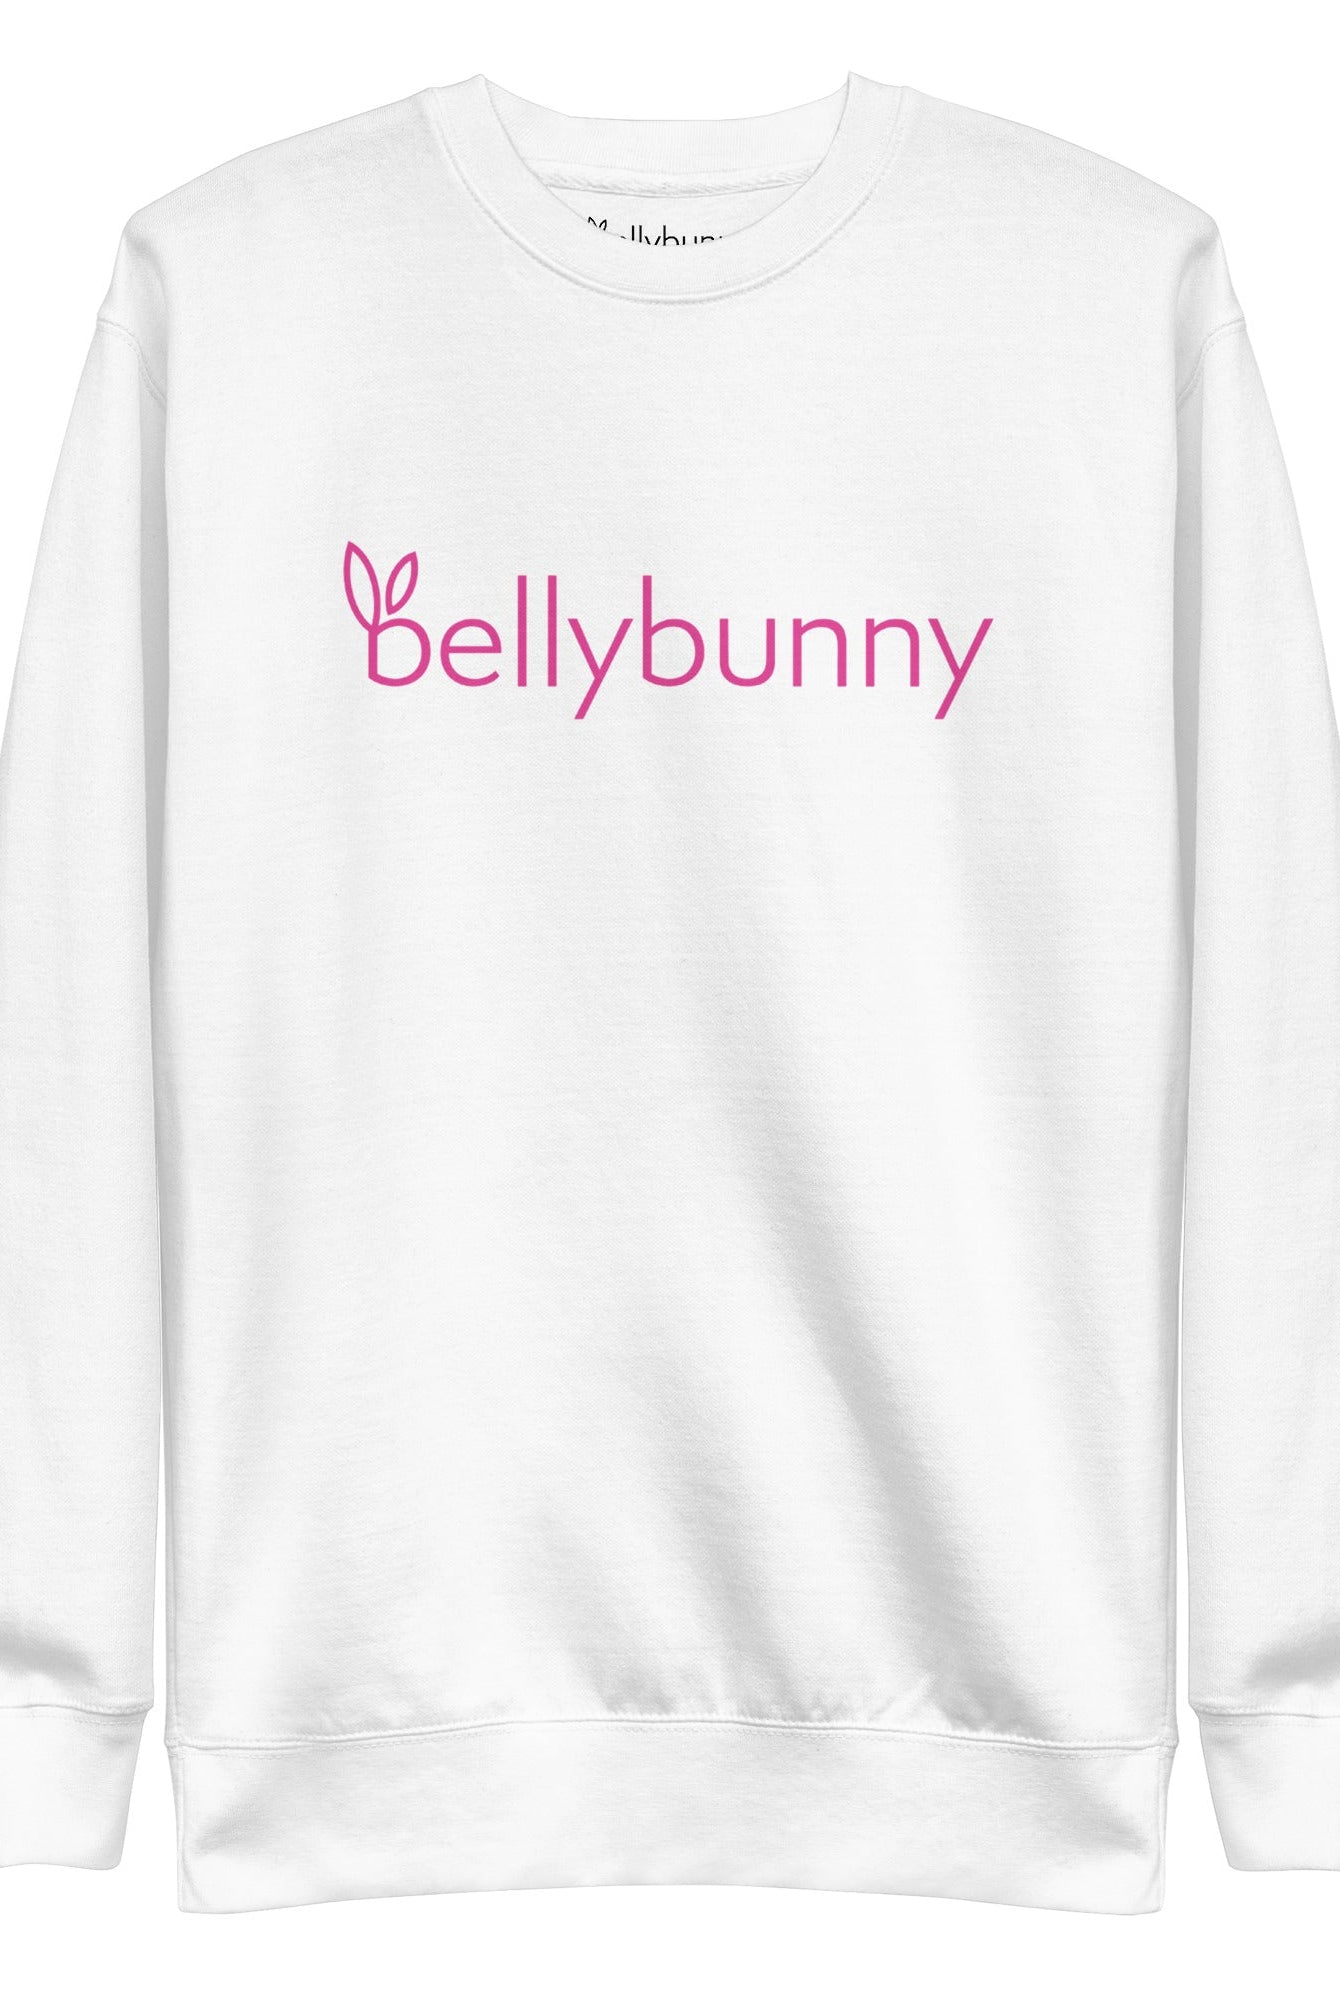 Bellybunny Sweatshirt WHite with Pink logo